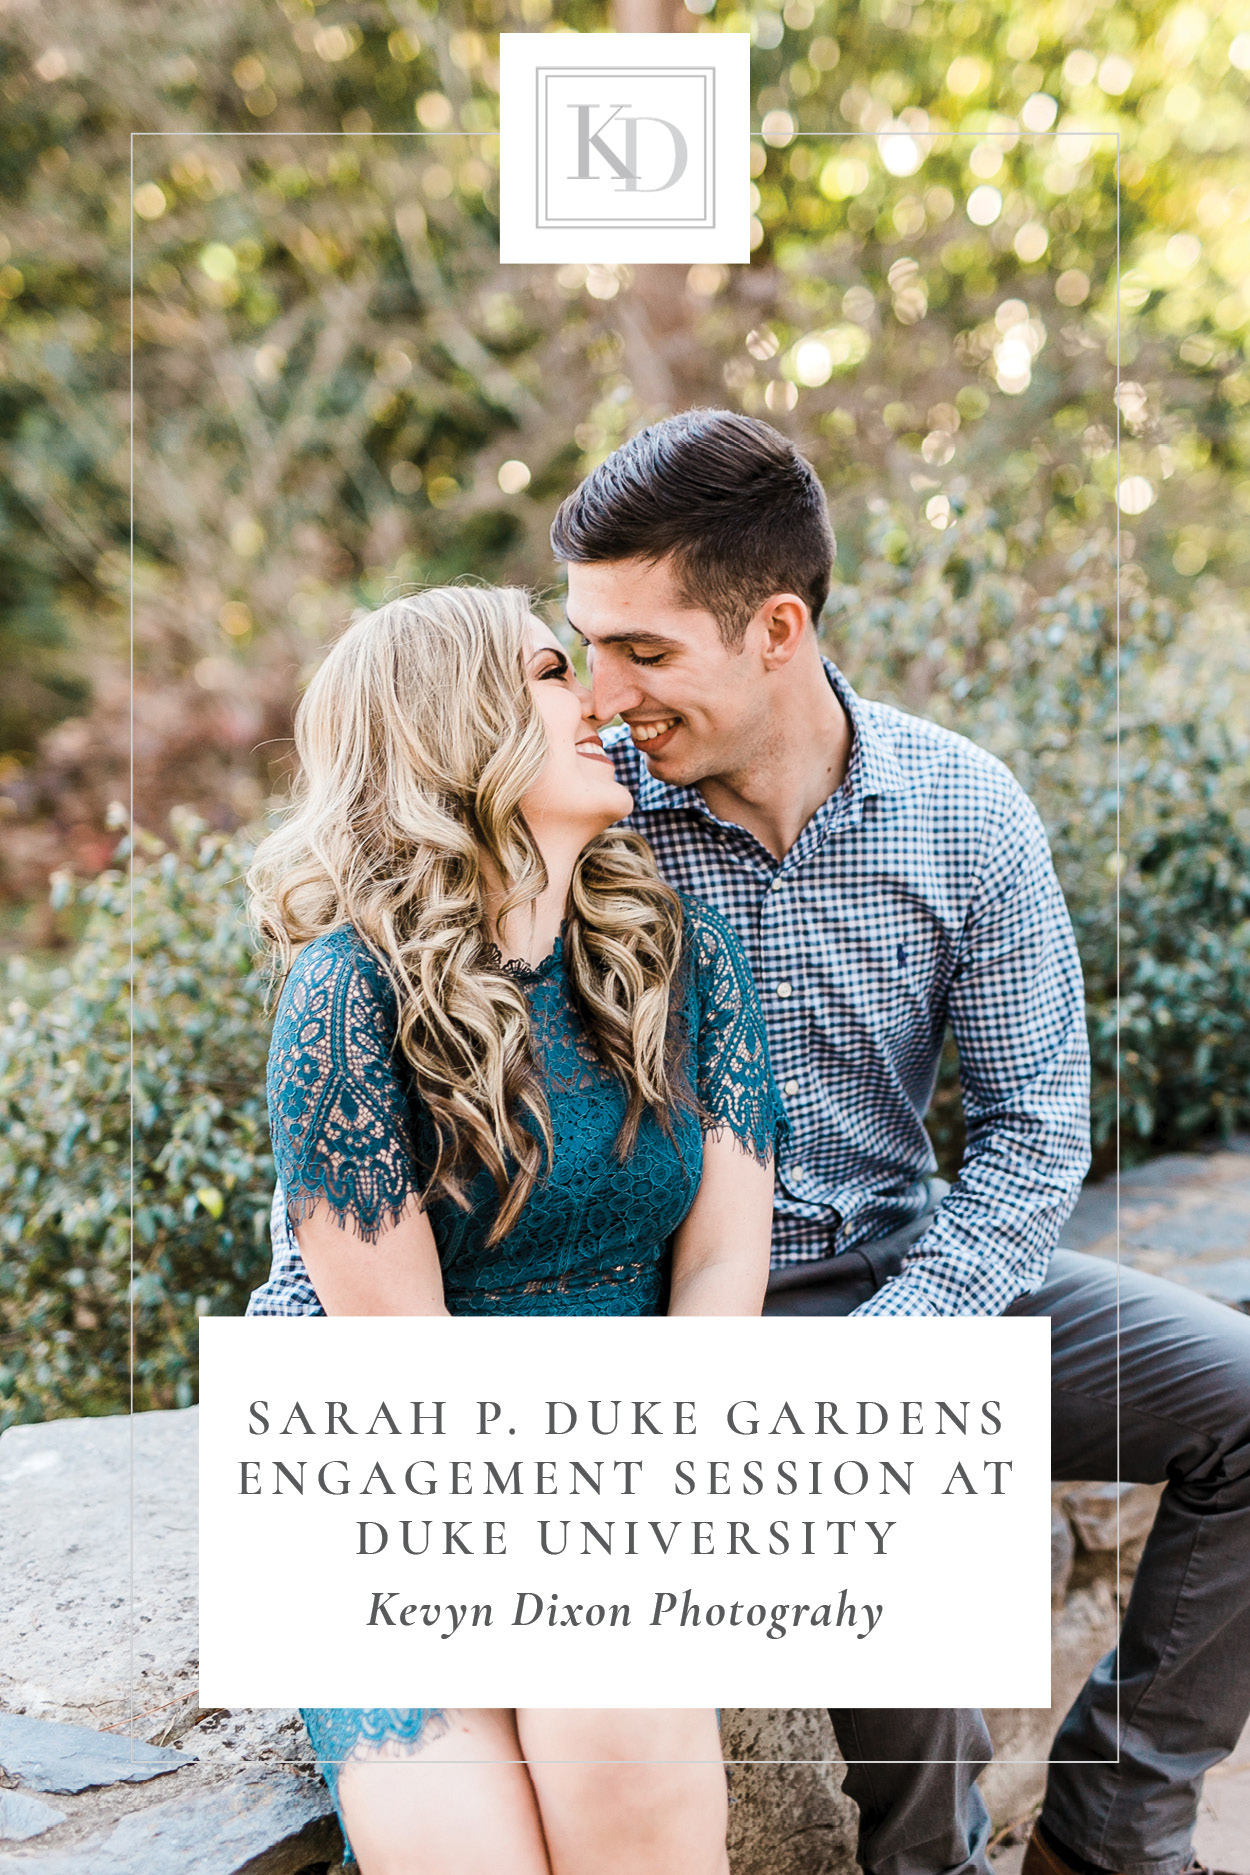 Sarah P. Duke Gardens Engagement Session at Duke University